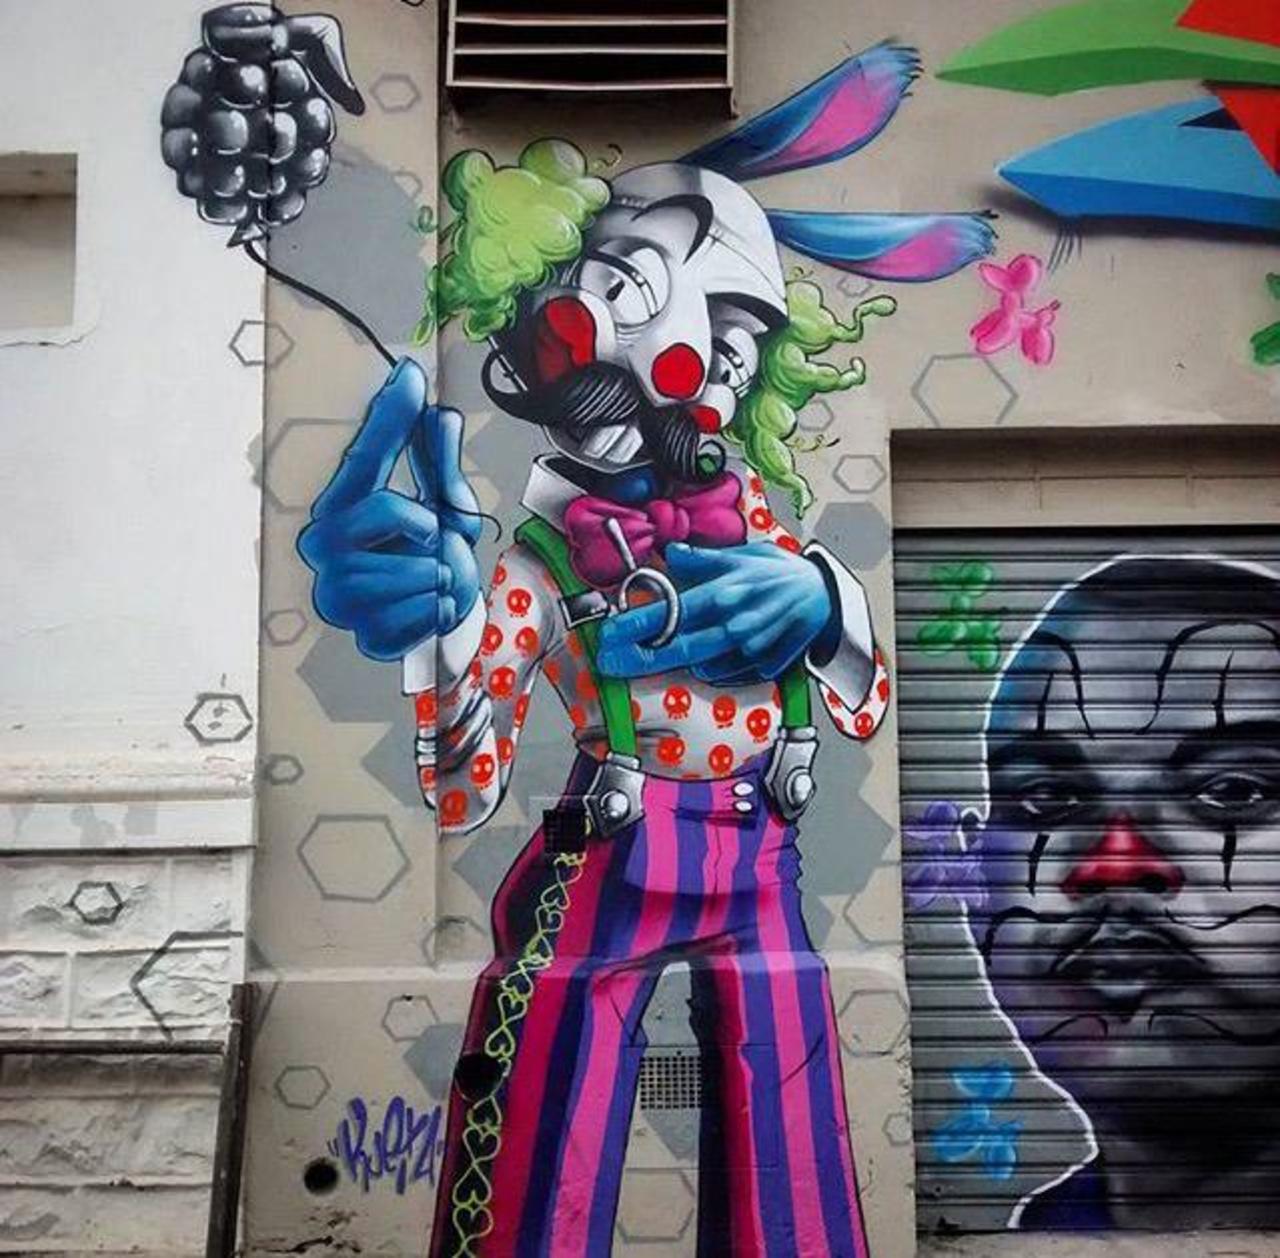 New Street Art by Karen Kueia 

#art #graffiti #mural #streetart http://t.co/CAtCayMGho